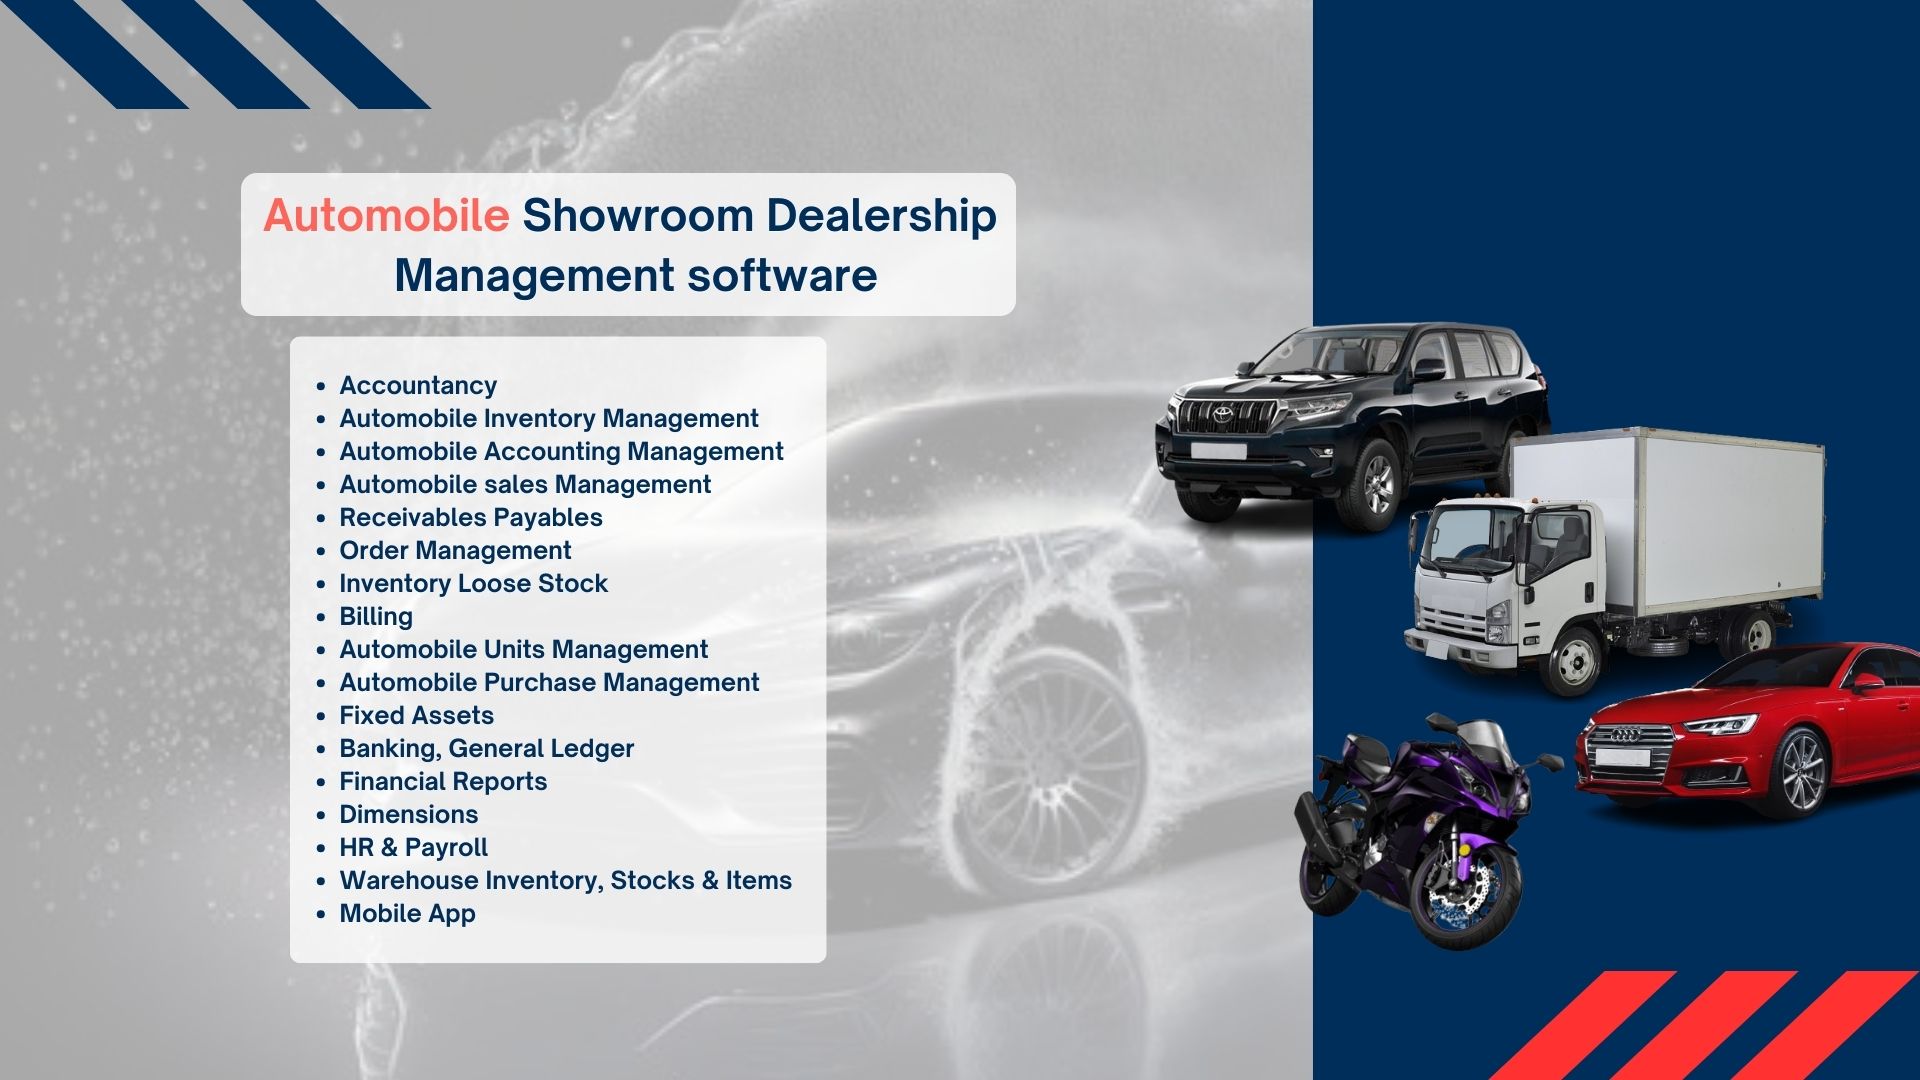 Automobile Showroom Dealership Management software - nizisolutions.com